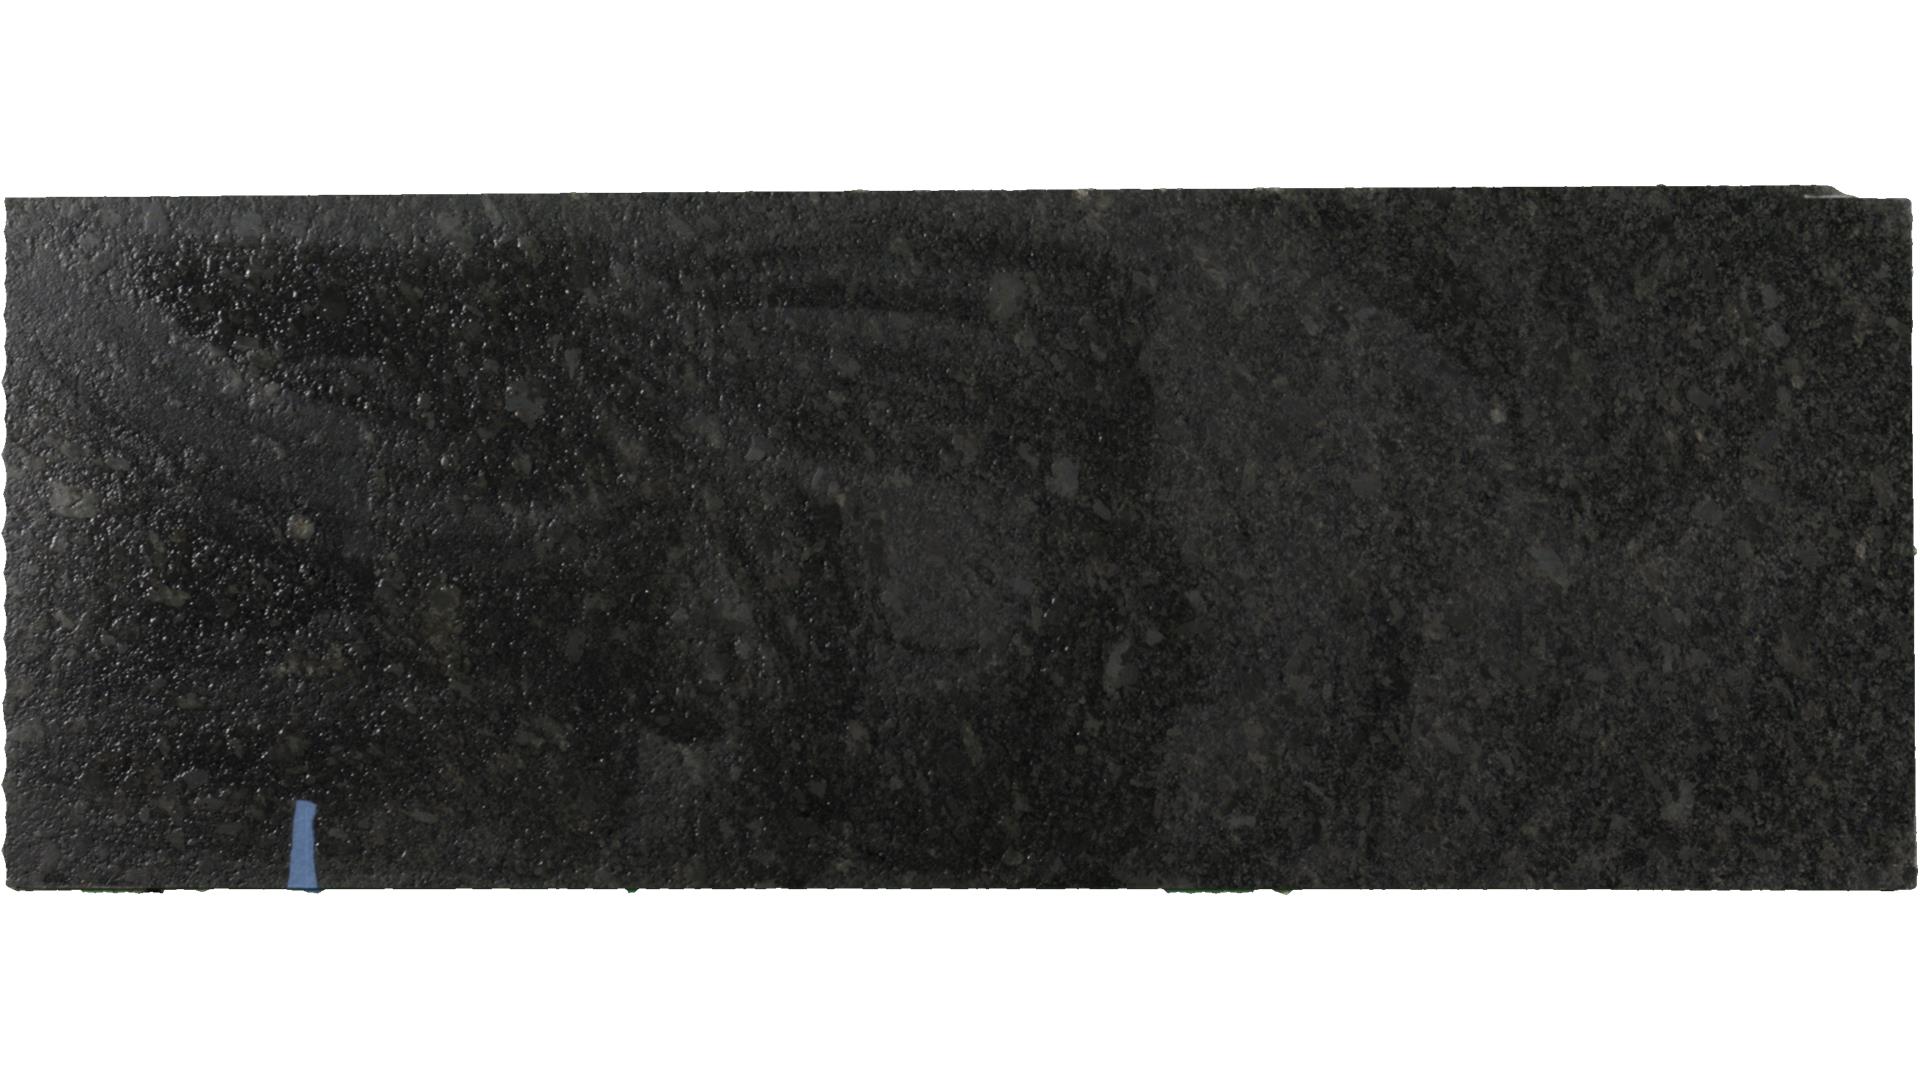 Leathered Granite Granite Slabs